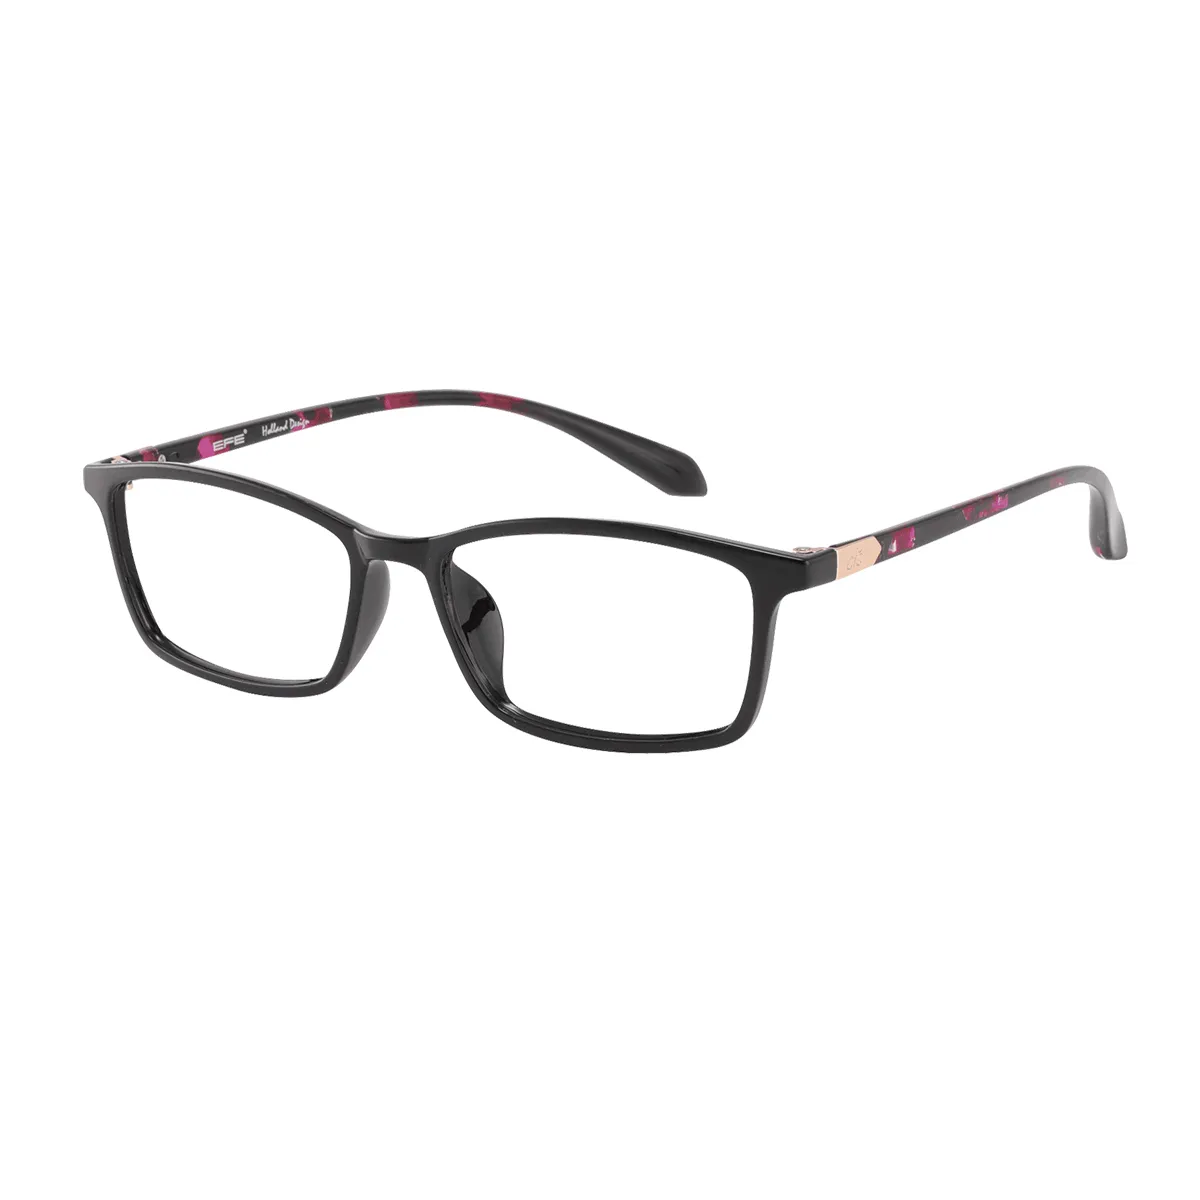 Fair - Rectangle Camouflage-pink Glasses for Men & Women - EFE